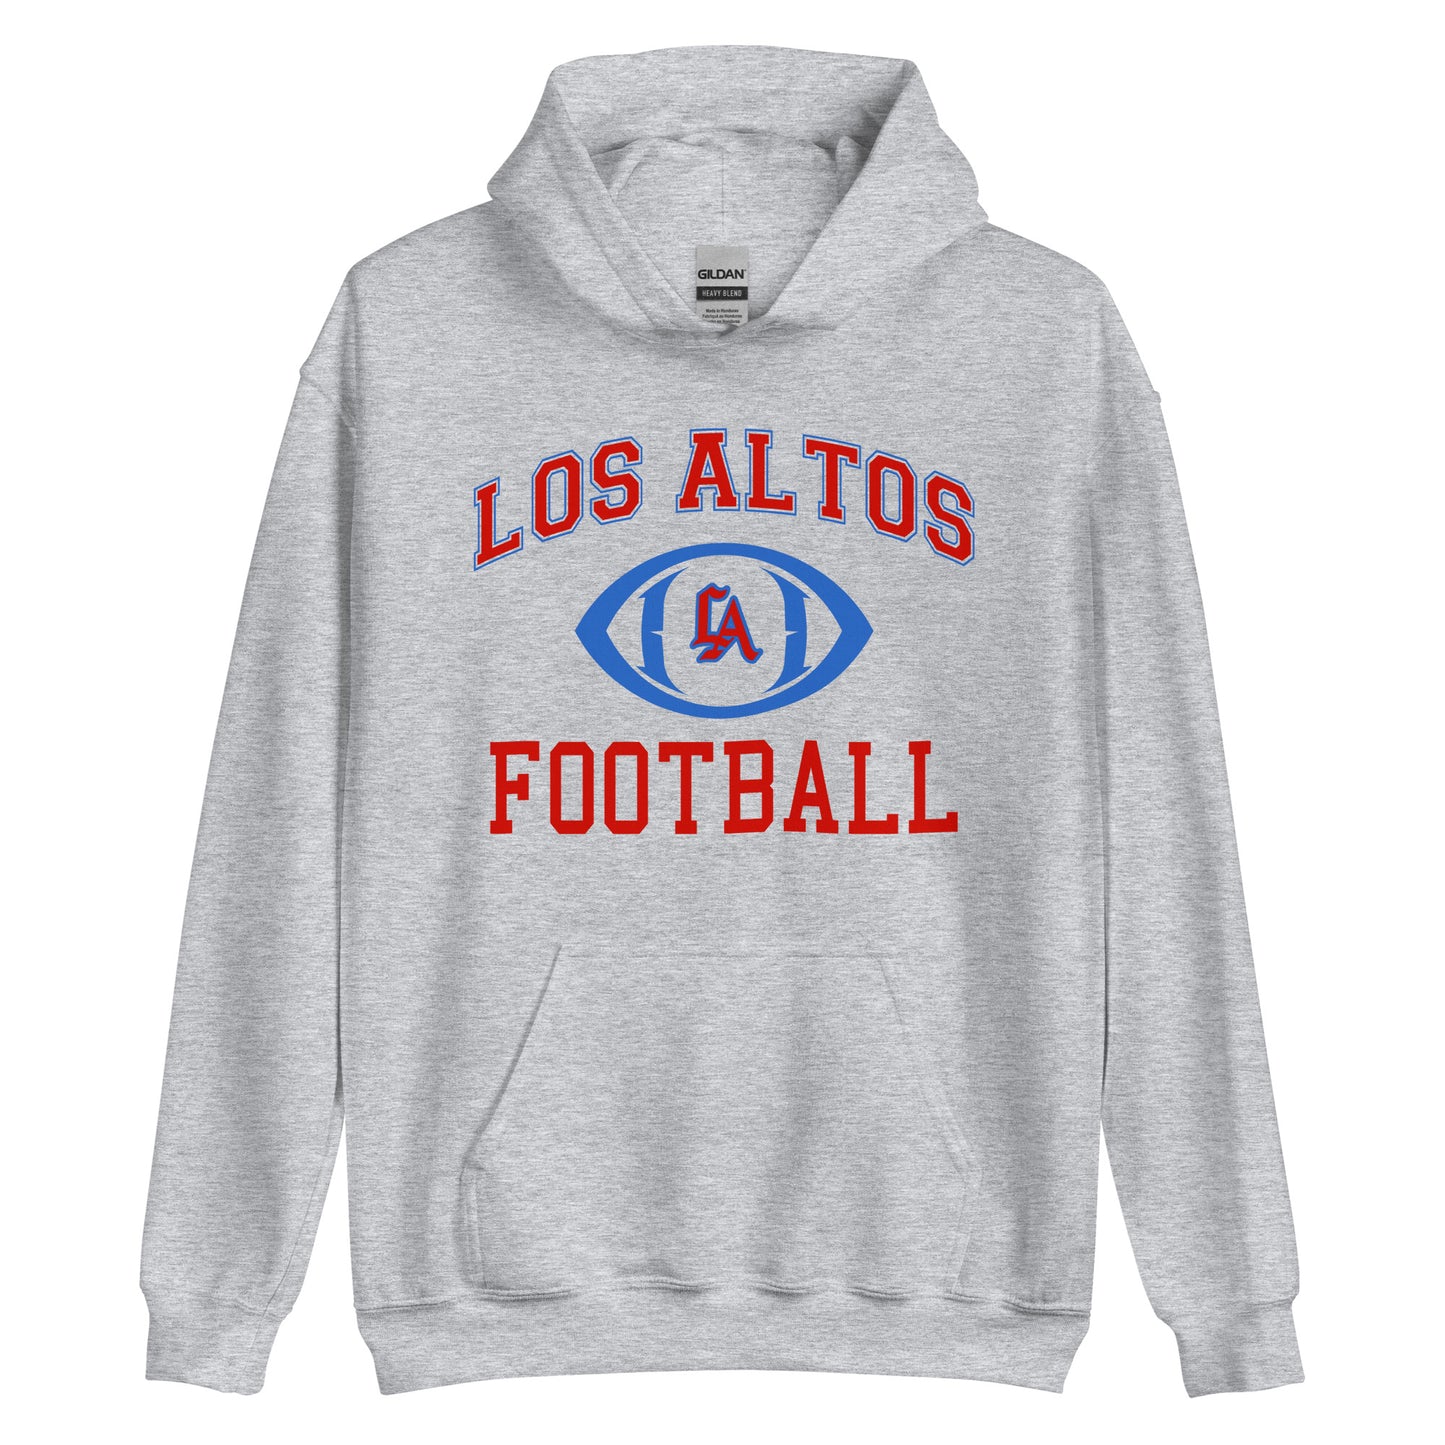 Los Altos Football Unisex Hoodie